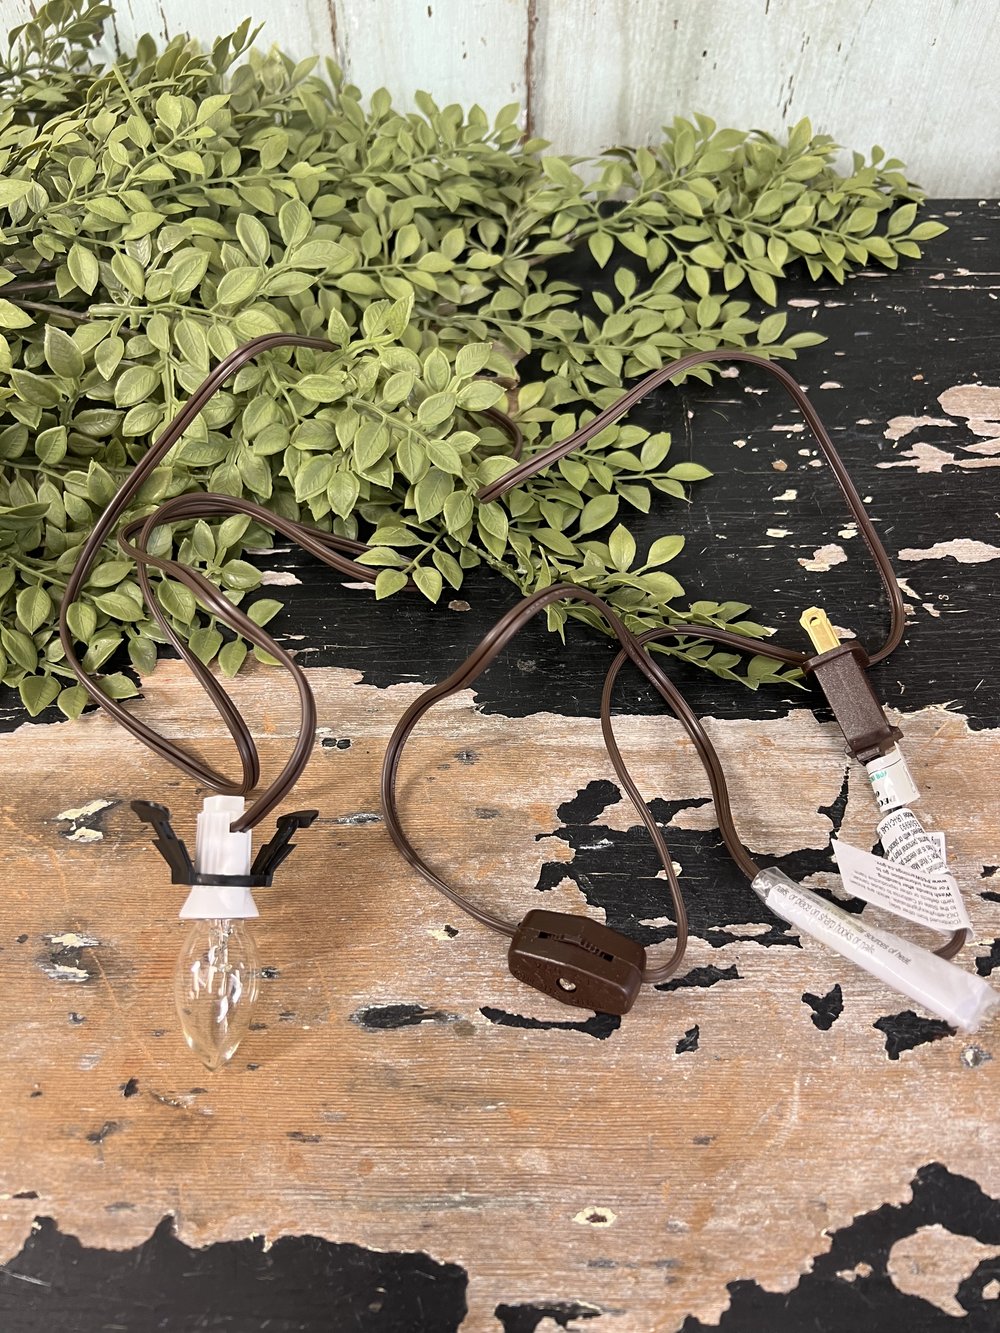 DIY Felt Flowers - The Shabby Tree